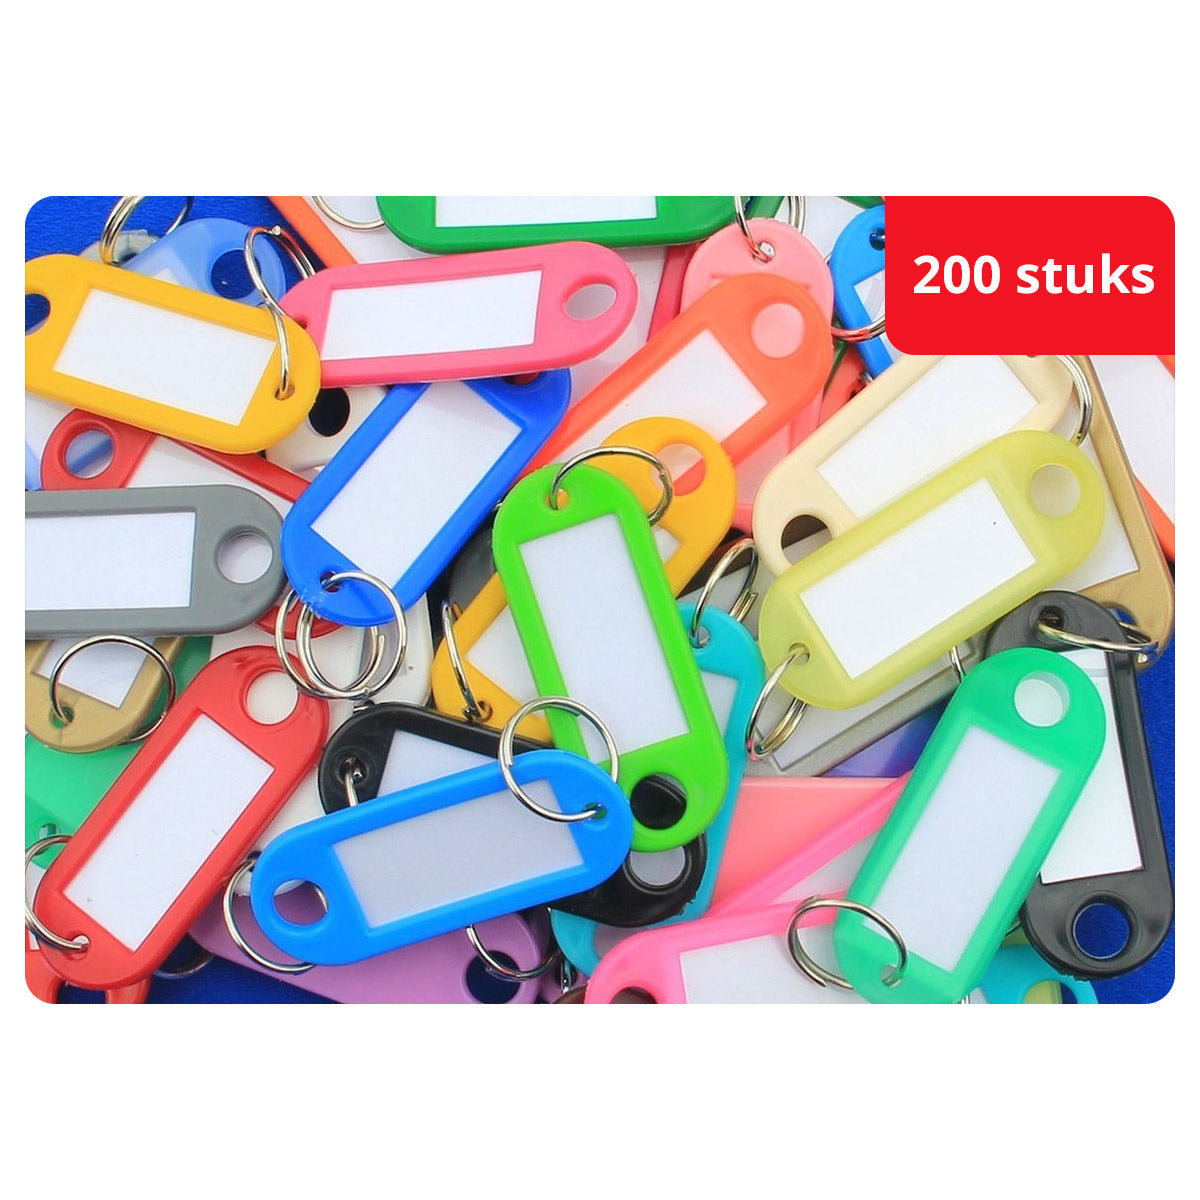 Schlüsseletiketten farbig sortiert - 200 Stk